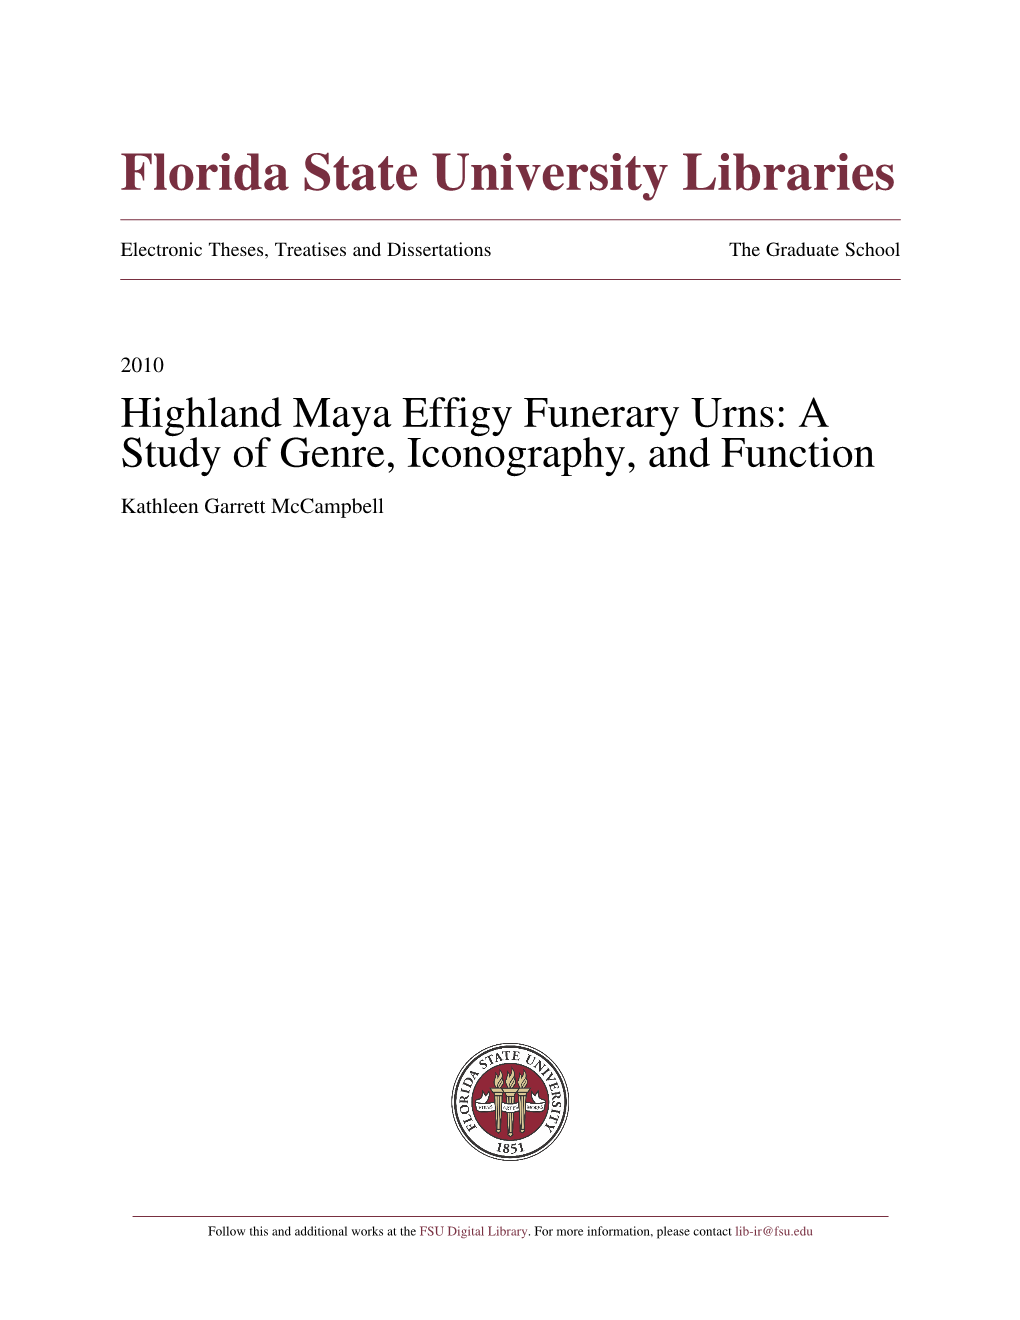 Highland Maya Effigy Funerary Urns: a Study of Genre, Iconography, and Function Kathleen Garrett Mccampbell